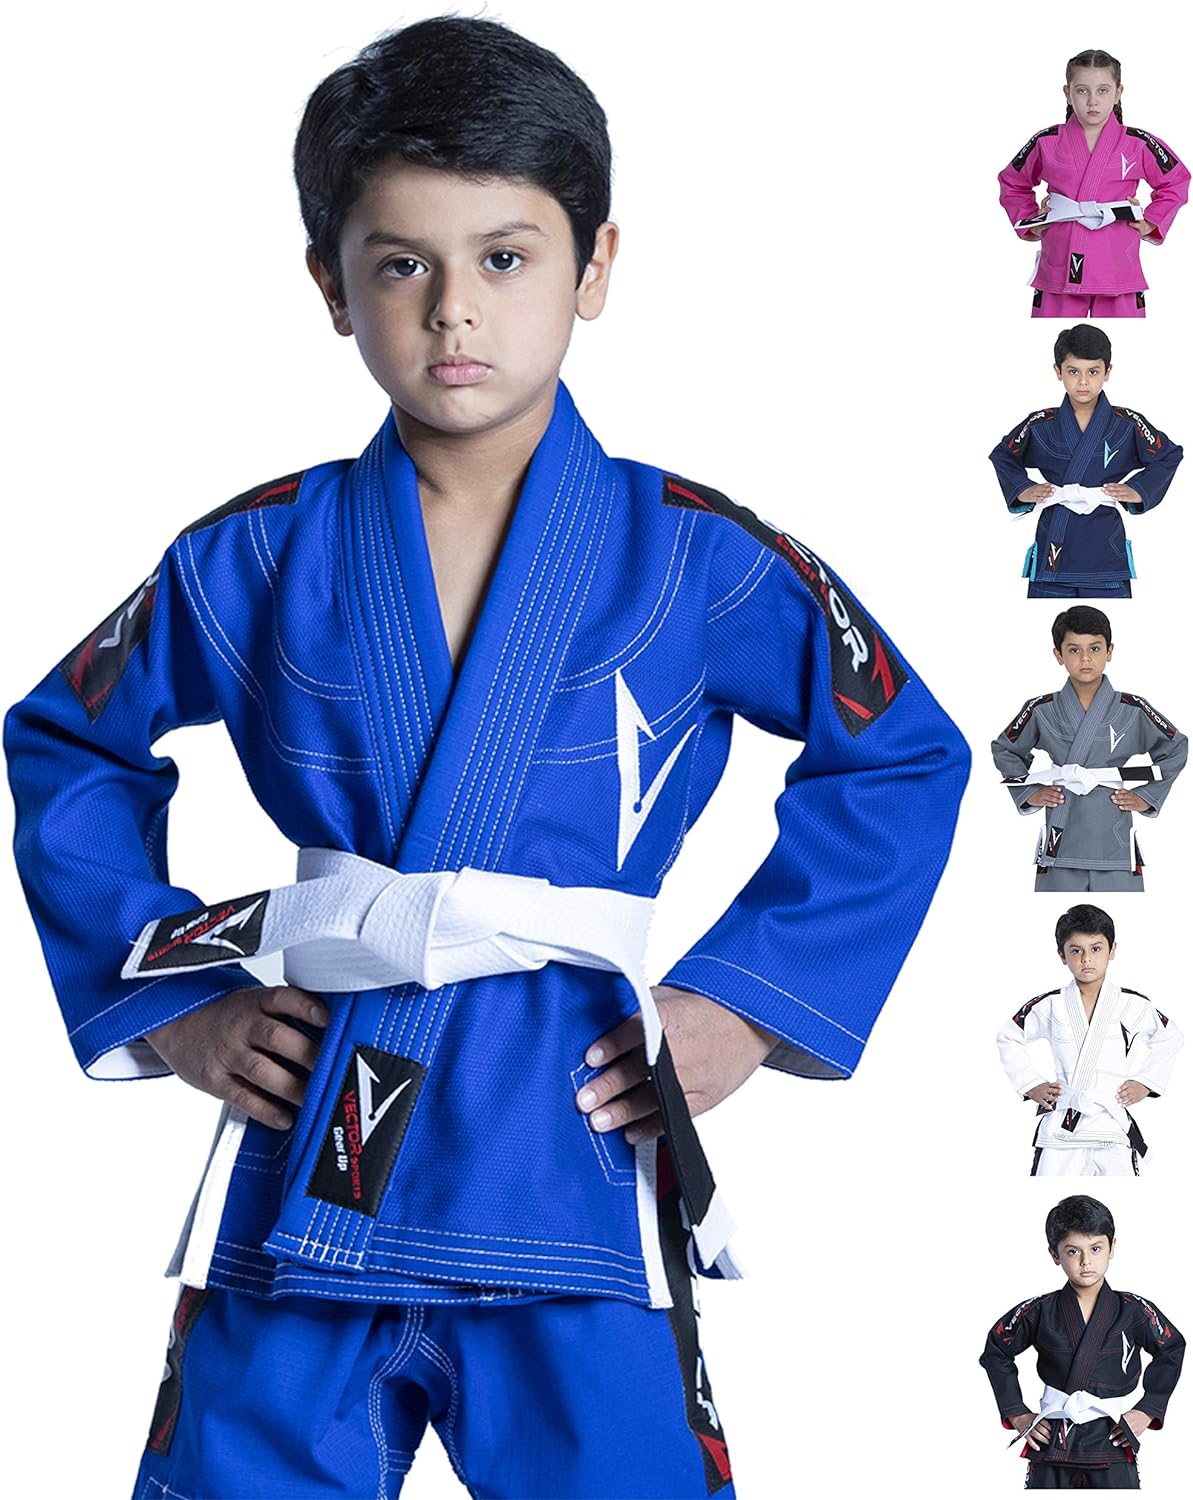 Eclipse Martial Art Supplies sporting goods K0 / Blue Brazilian BJJ Gi Jiu Jitsu Gi for Child Kids Gi Uniform Durable Pant & Jacket 100% Cotton with Free Belt